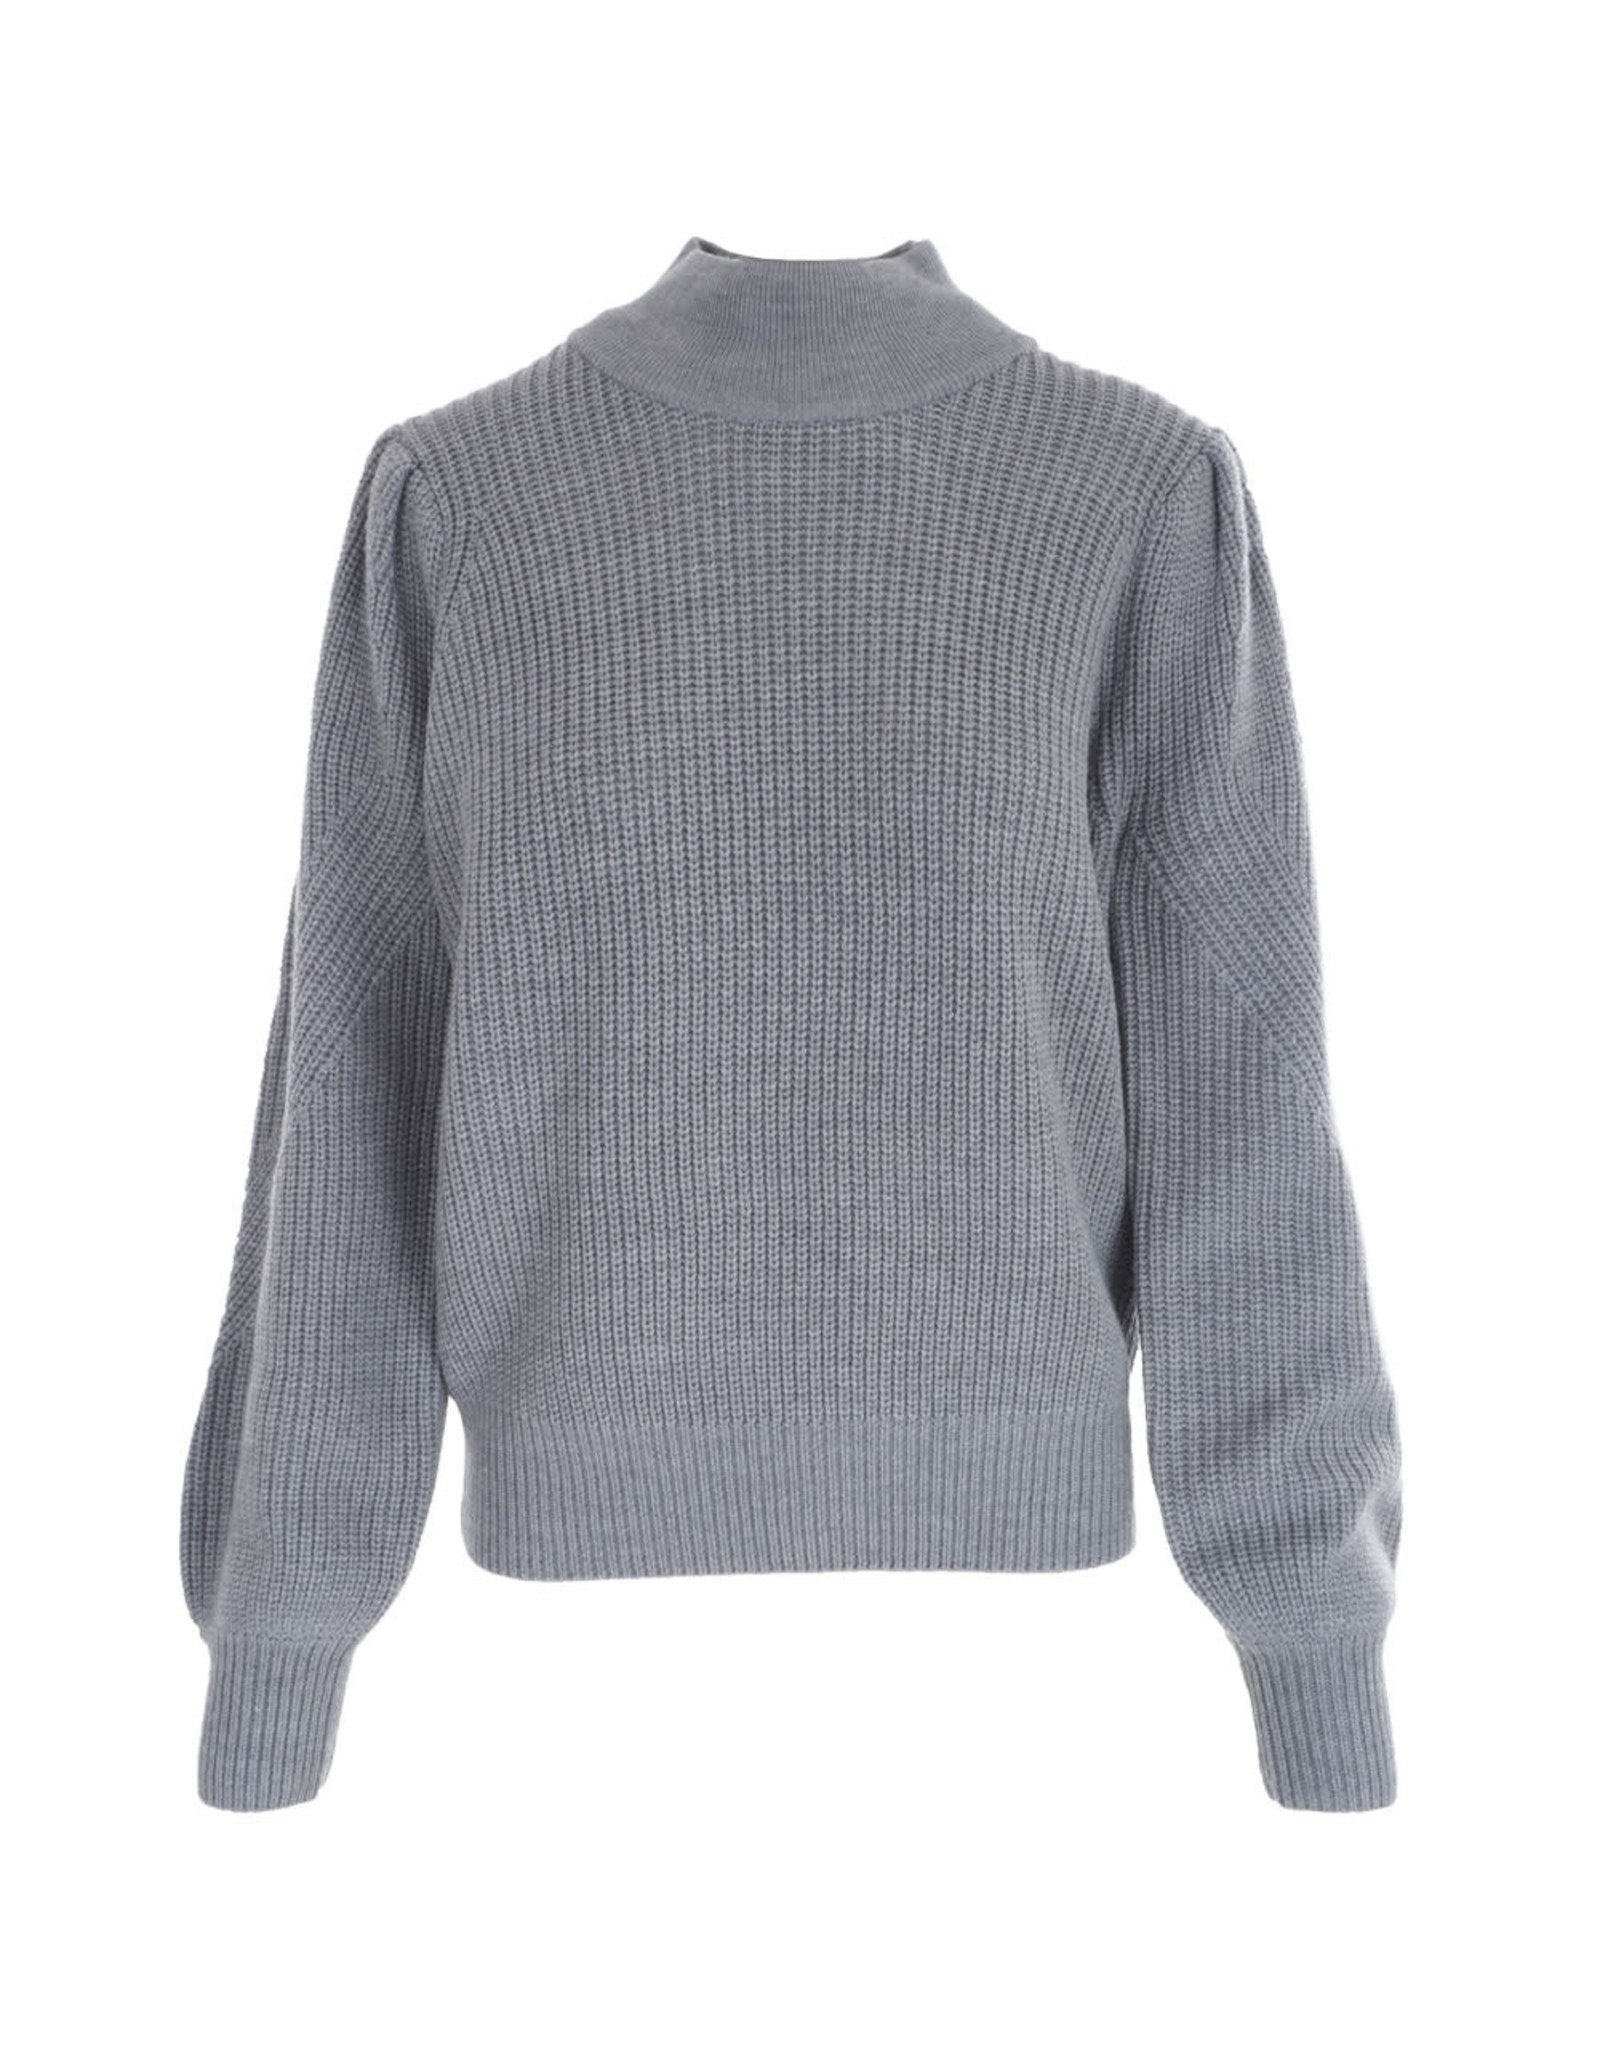 Repeat Sweater 300262 Grey